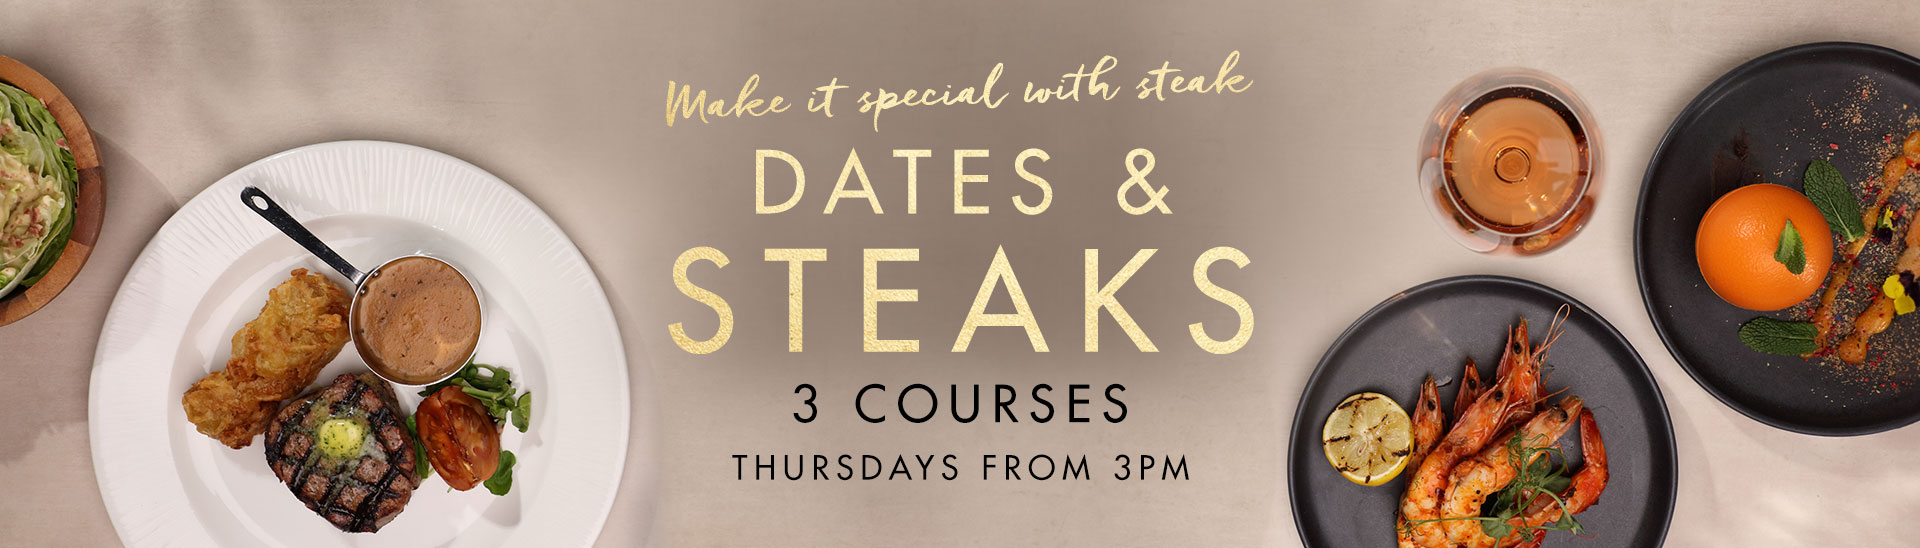 Dates & Steaks at Miller & Carter Warrington